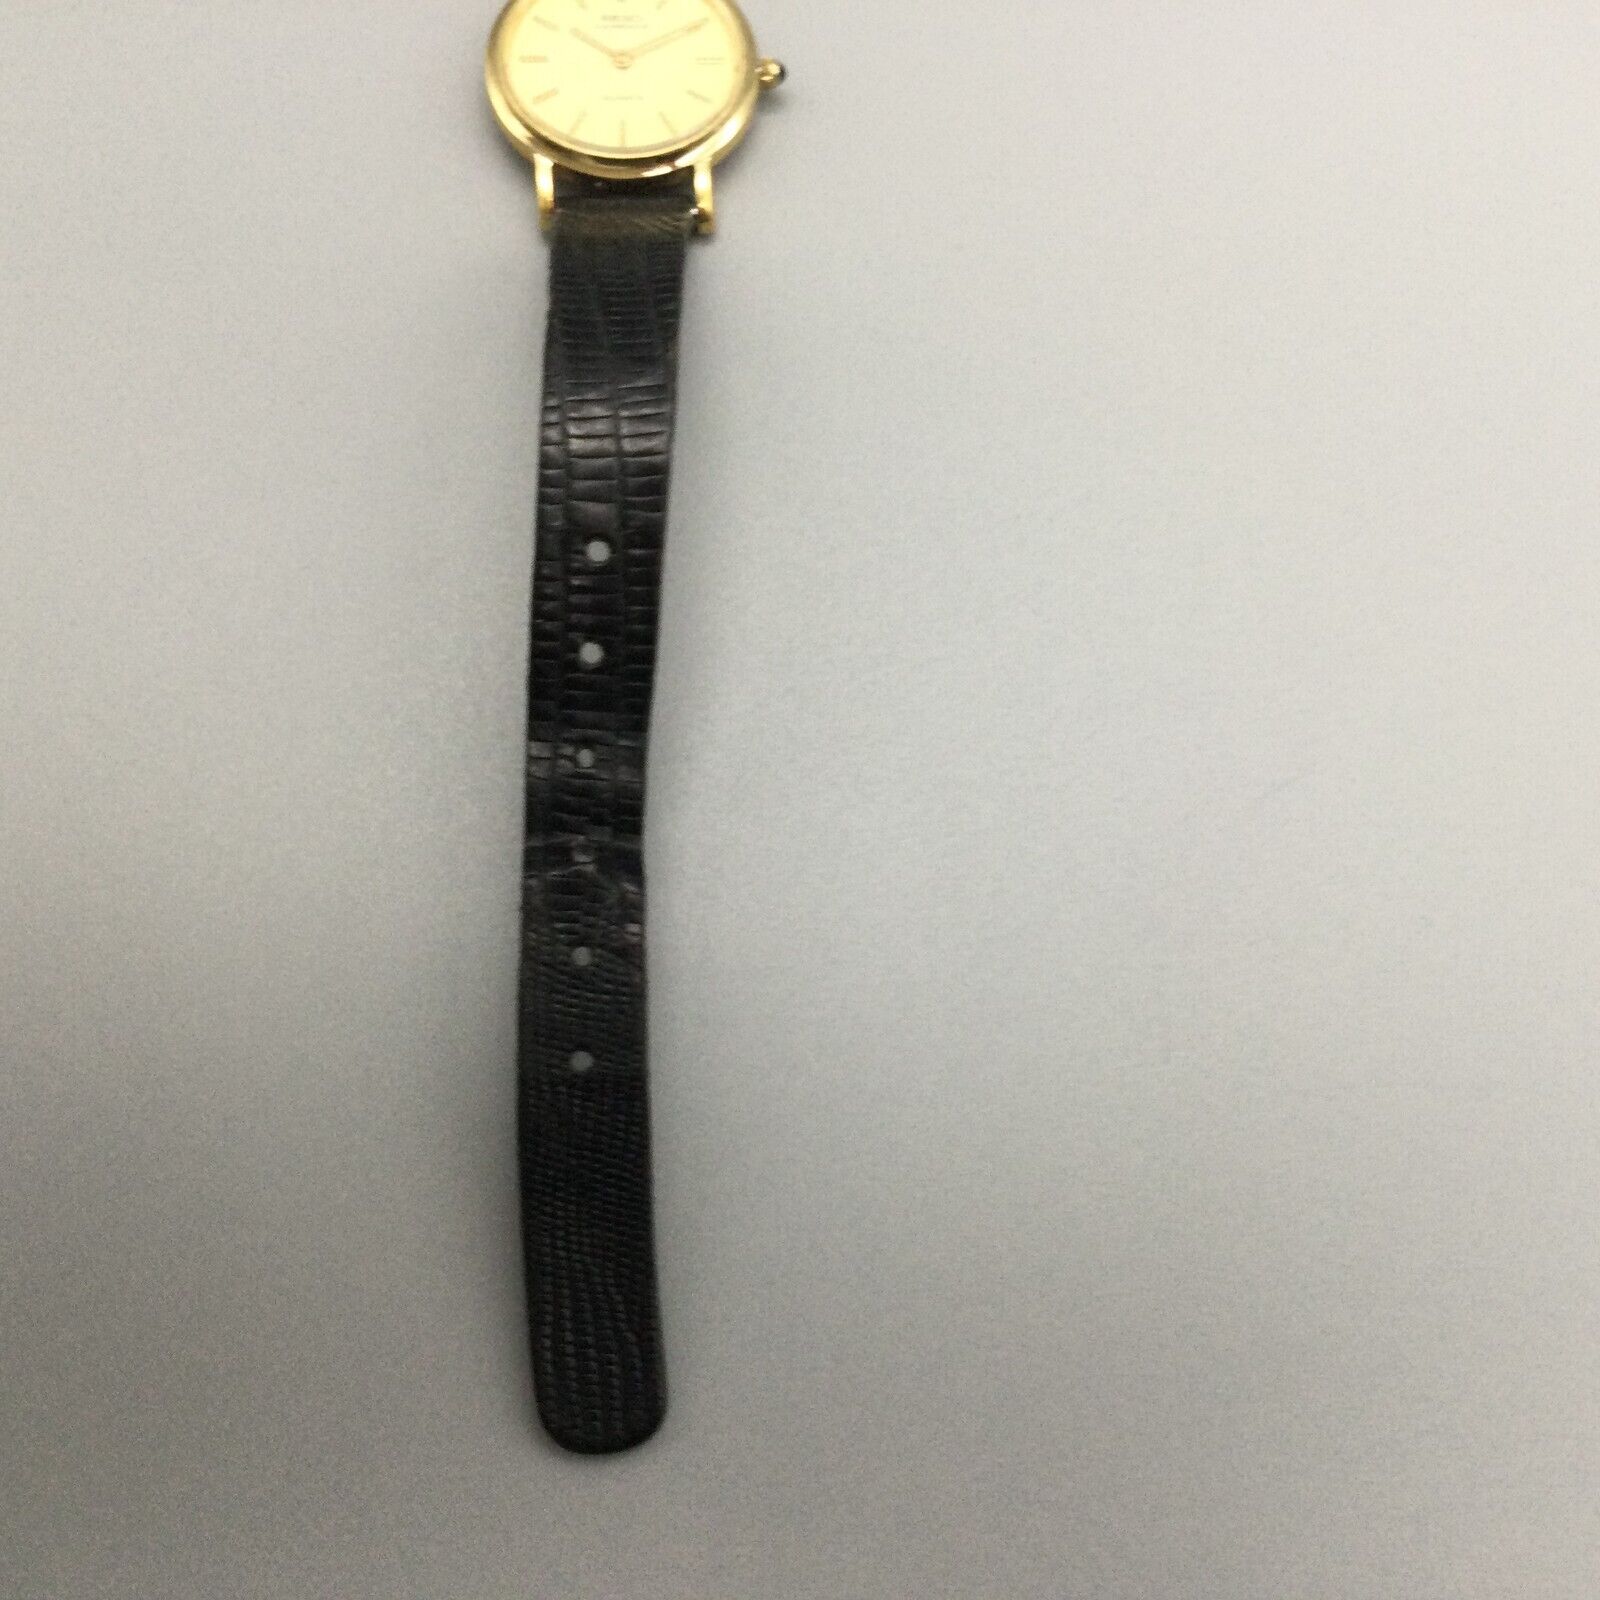 Seiko Lassale Watch Women Gold Tone Round Dial Black Leather Strap